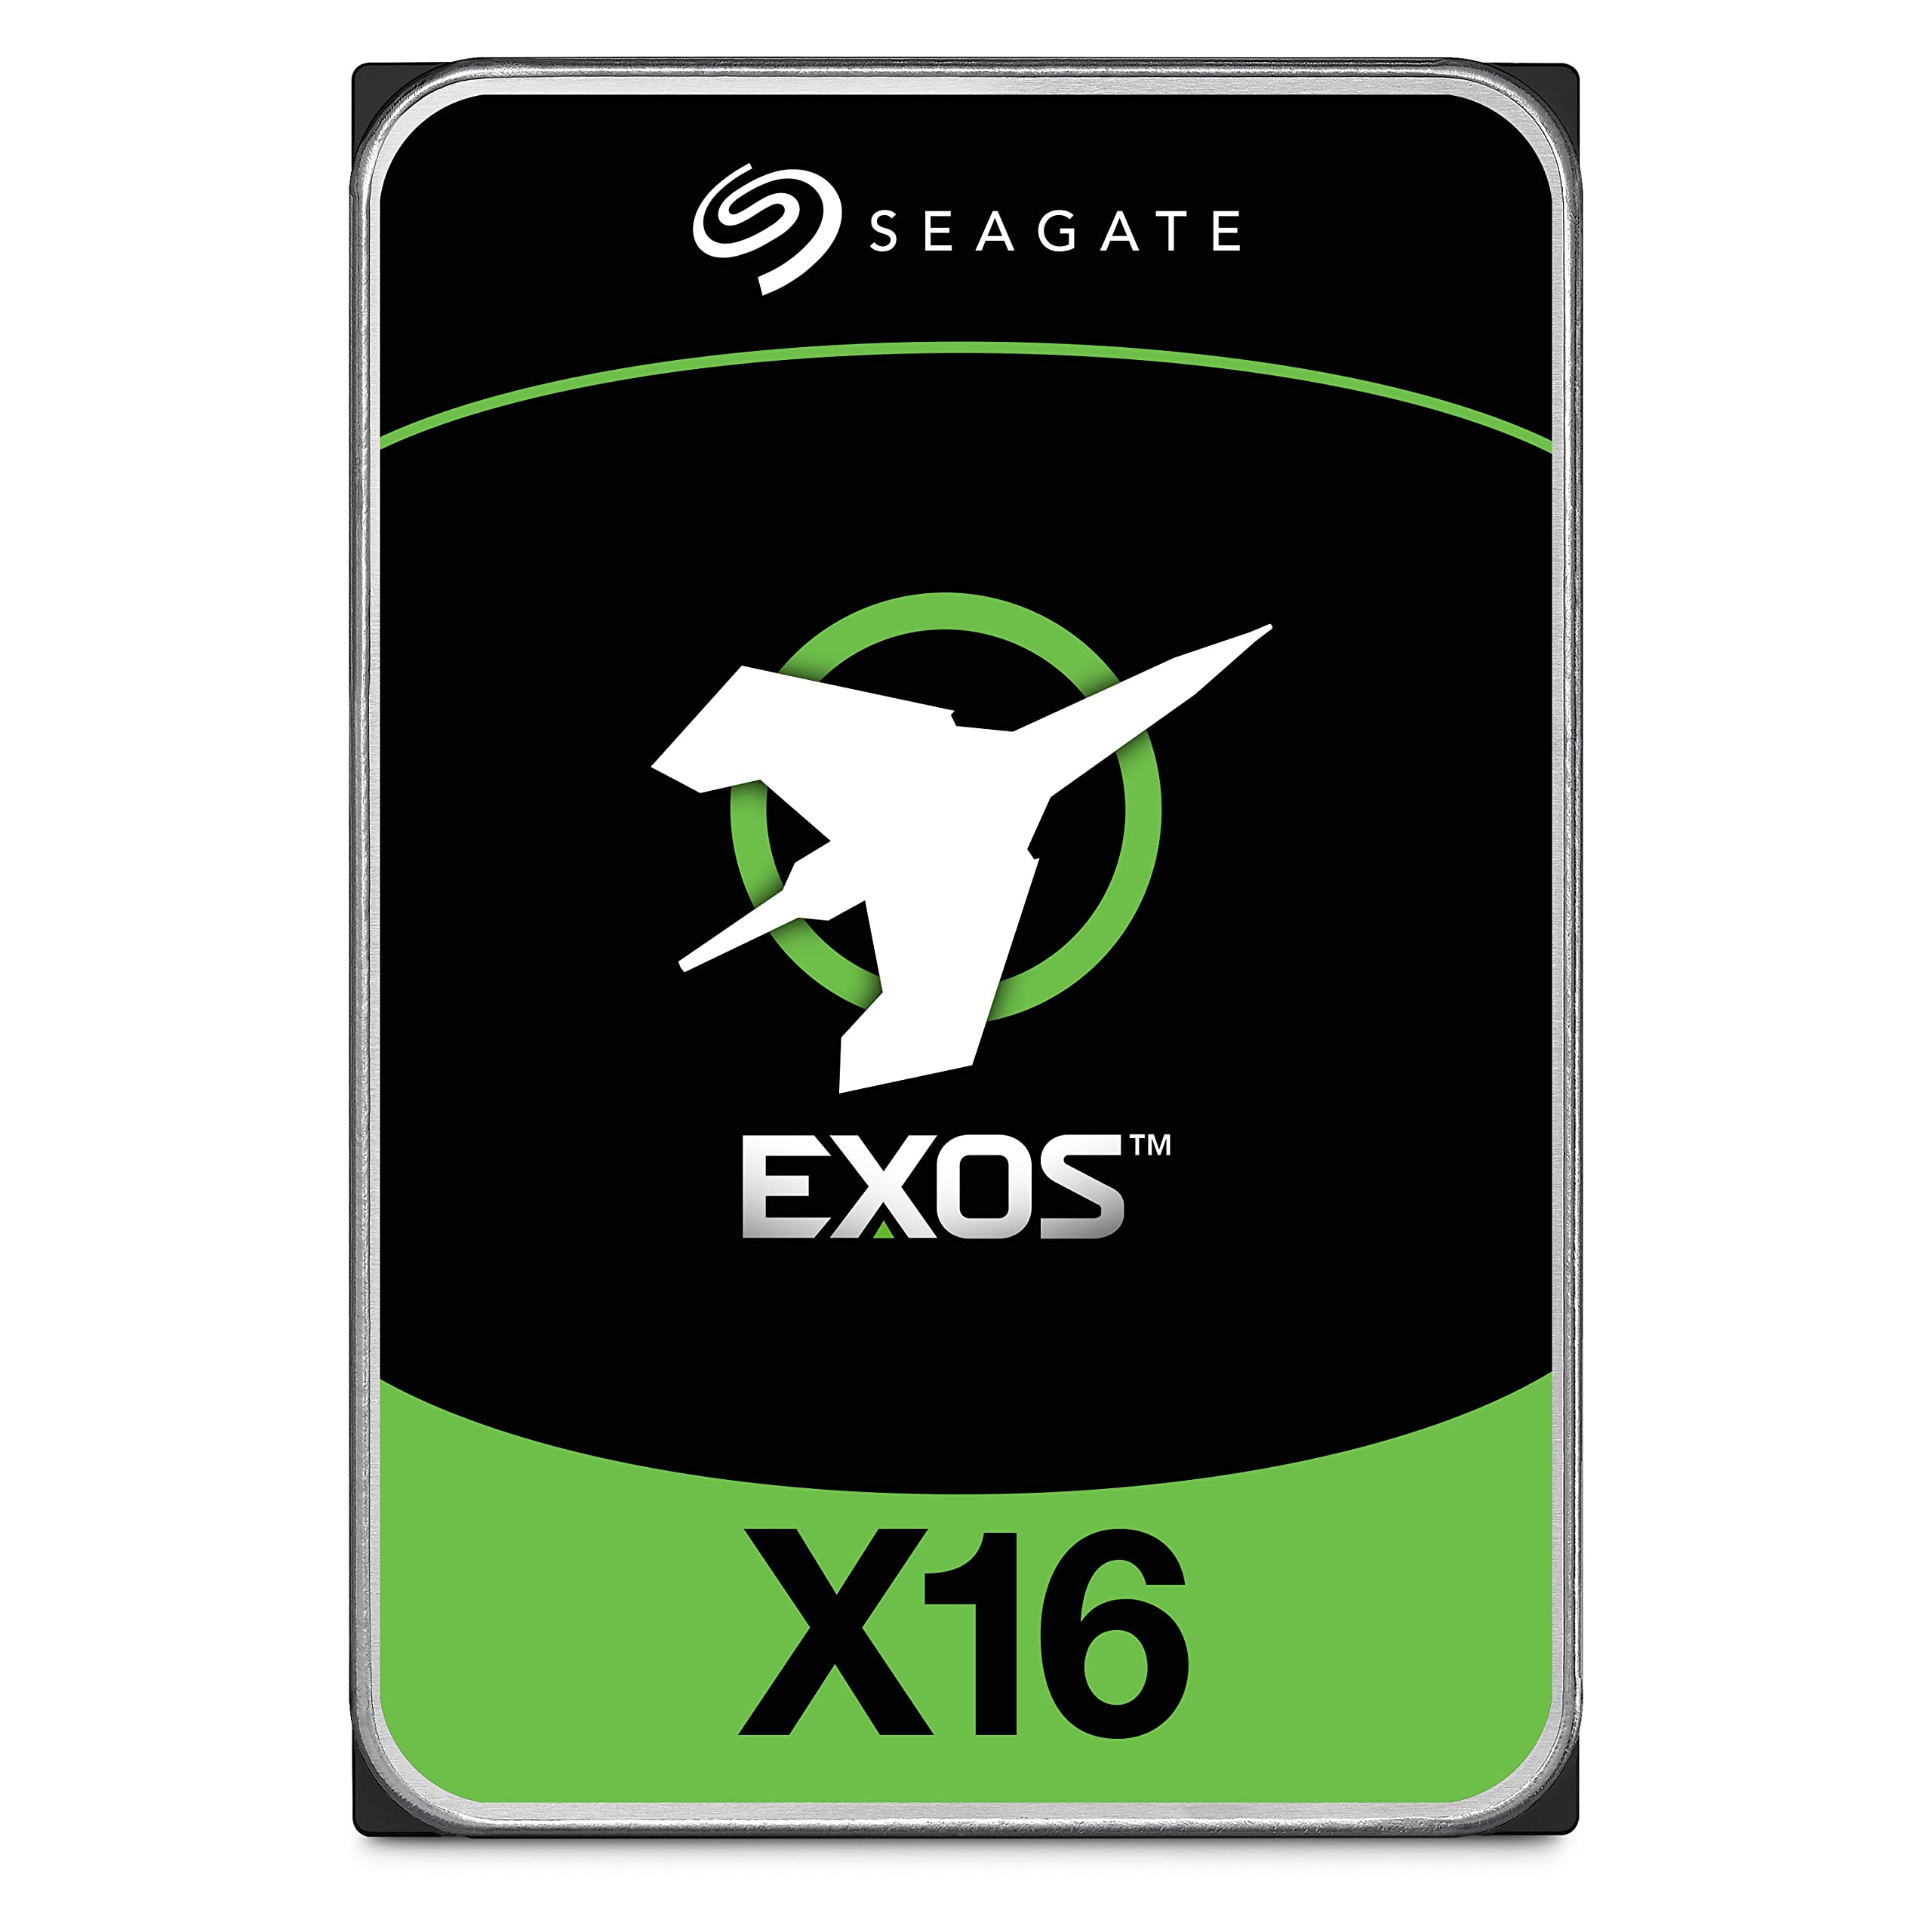 Seagate Exos X16 SAS 512ECMR 内蔵ハードディスク 3.5 10TB 5年削除削除品ST10000NM002G